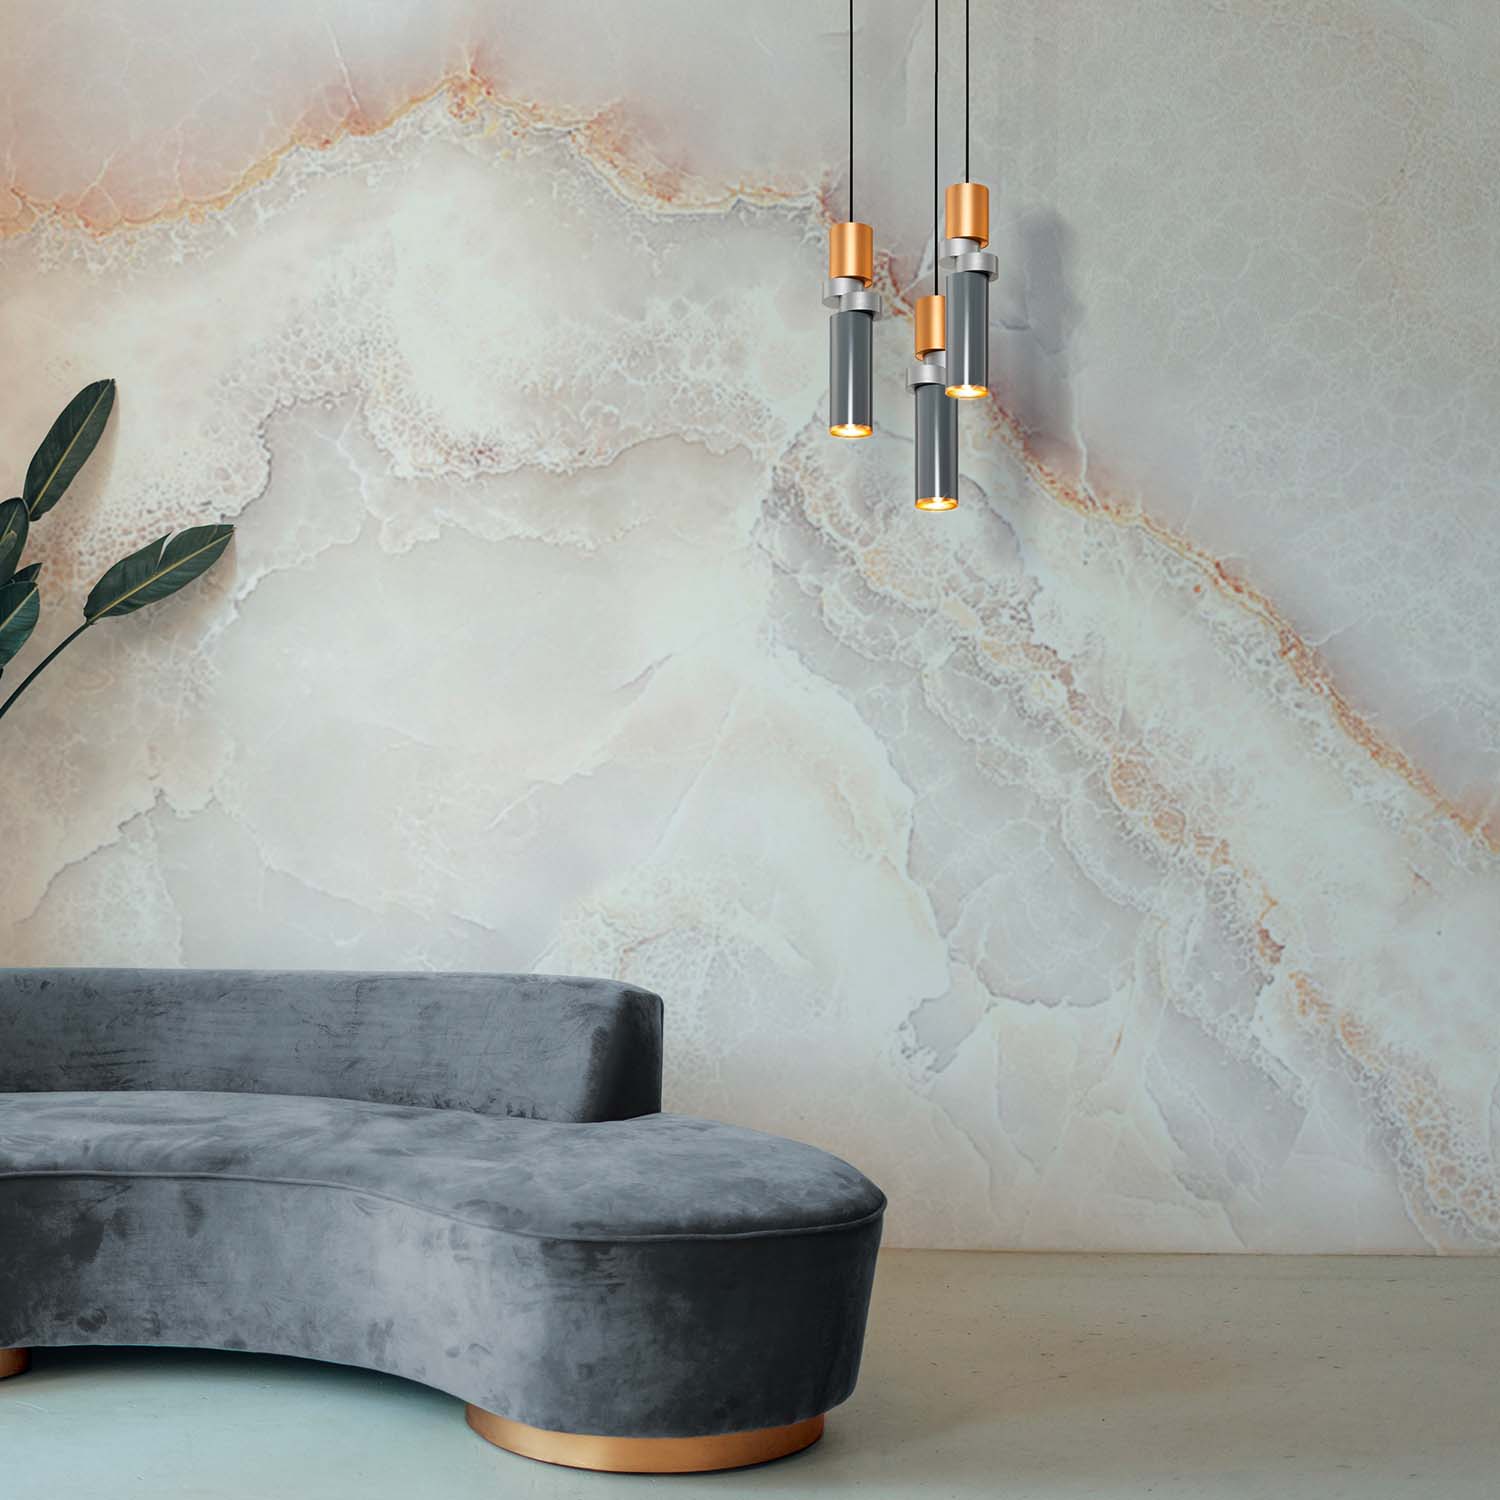 PALETTE - Designer and asymmetrical gray and copper pendant light